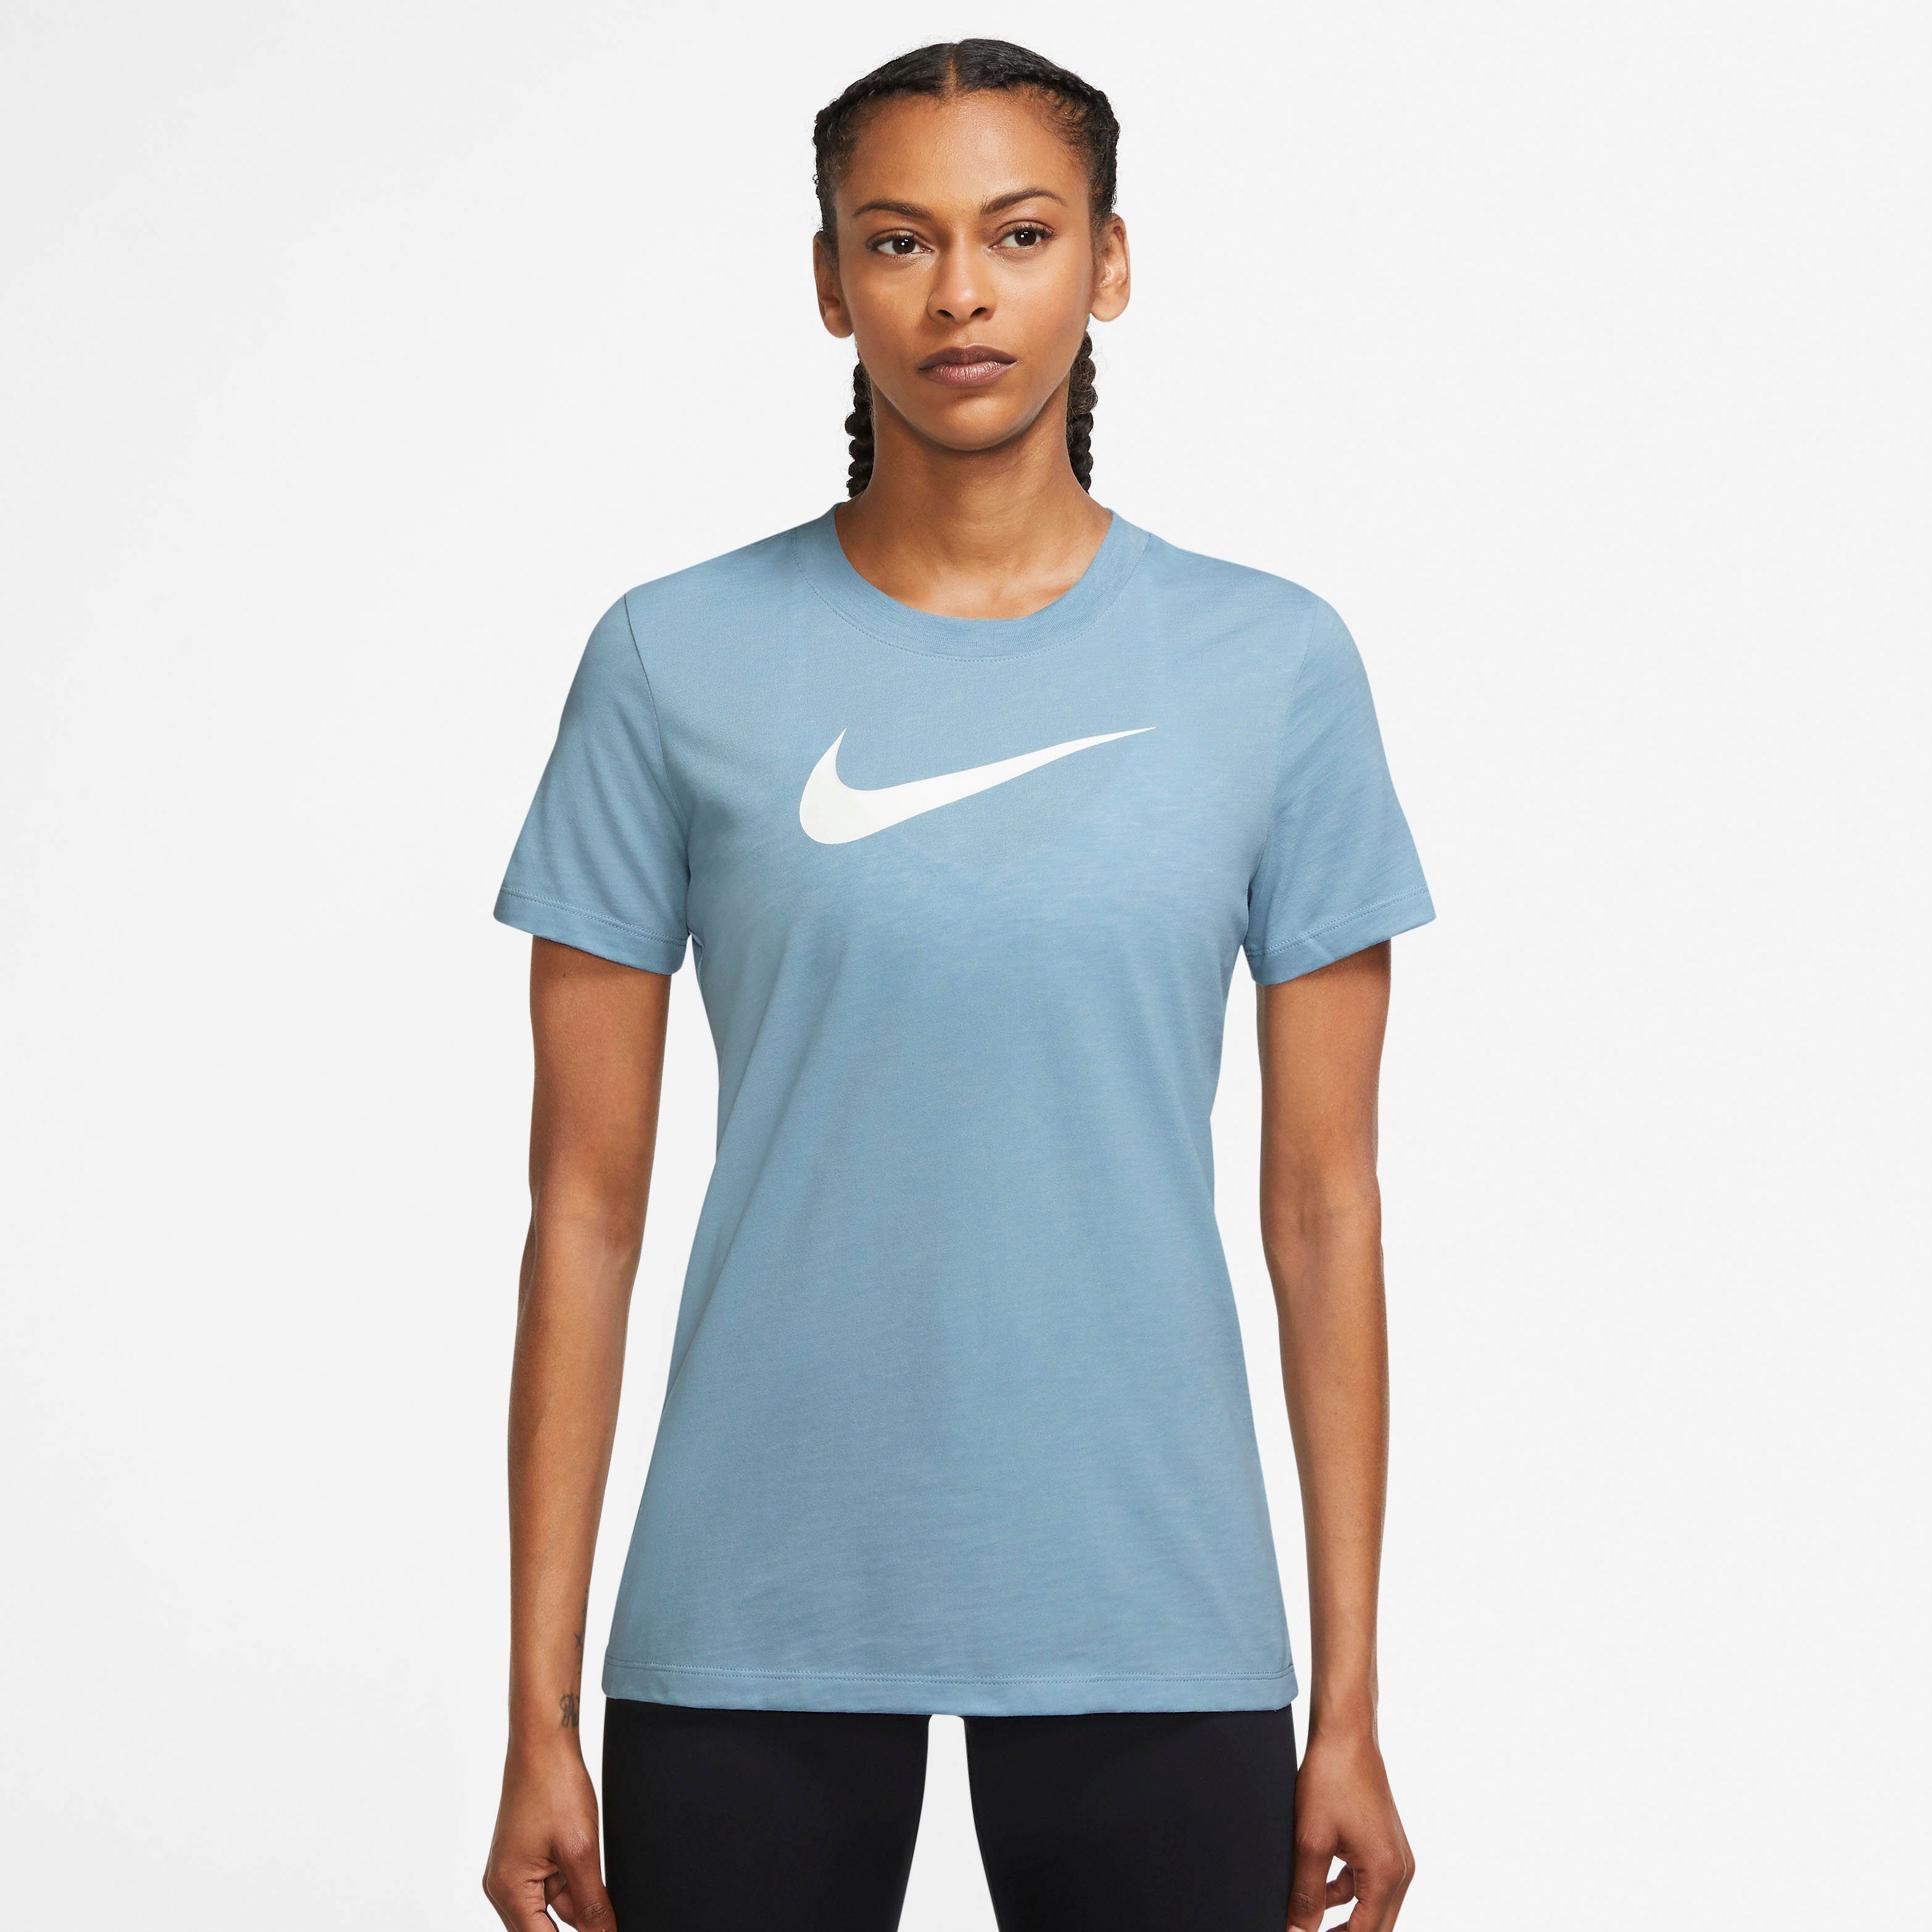 Nike Trainingsshirt »DRI-FIT WOMENS TRAINING T-SHIRT« online kaufen | OTTO